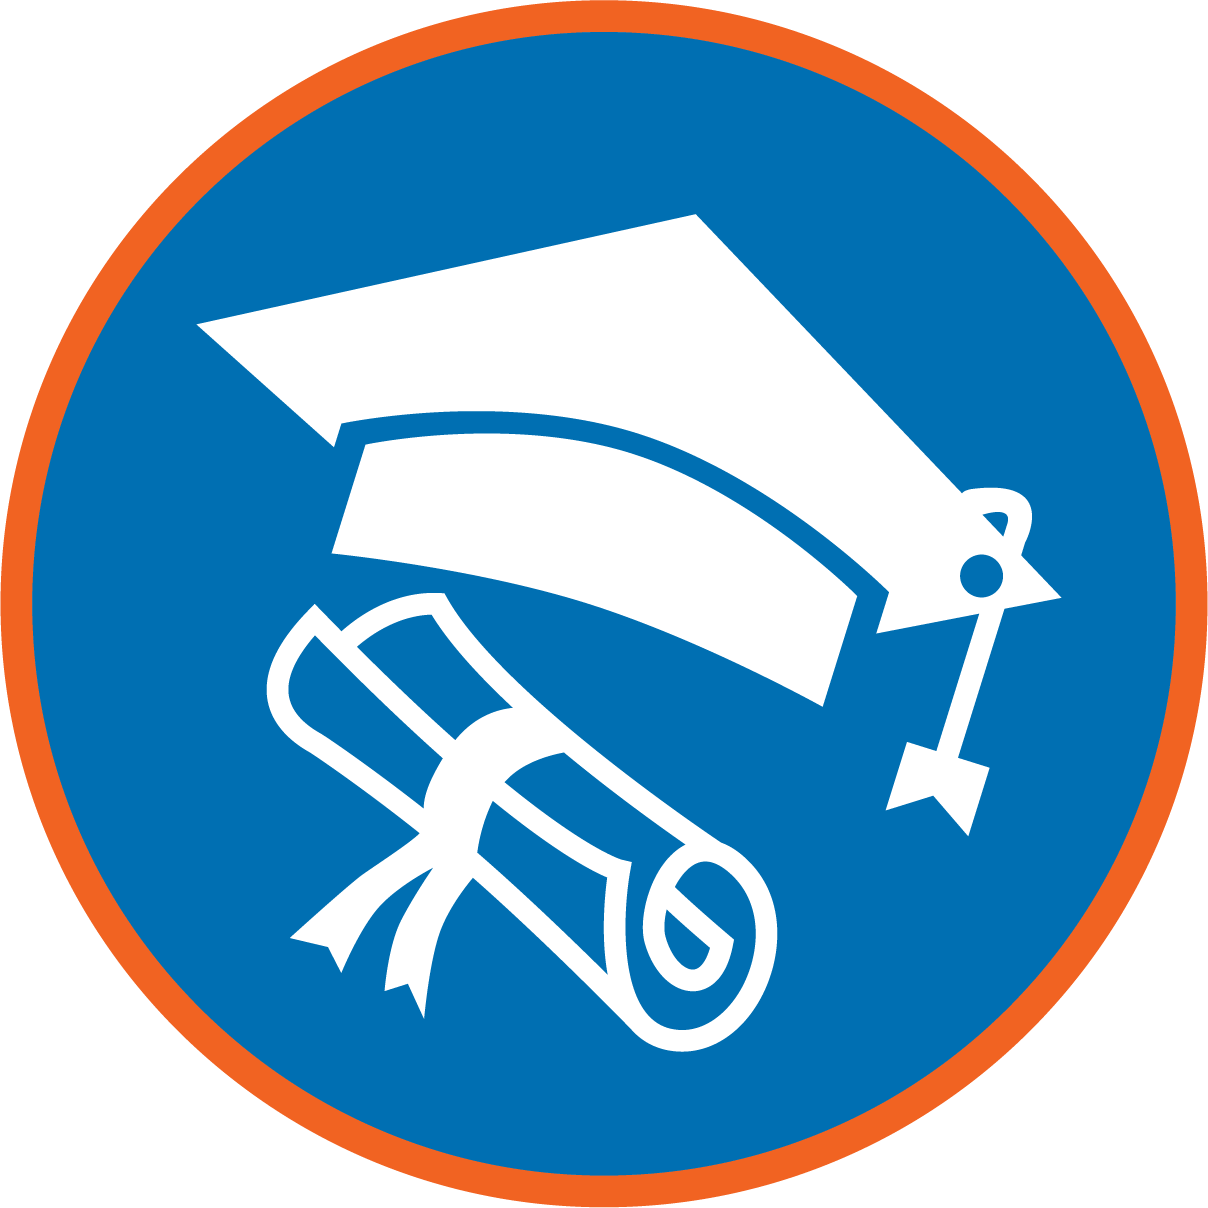 50th graduation cap icon